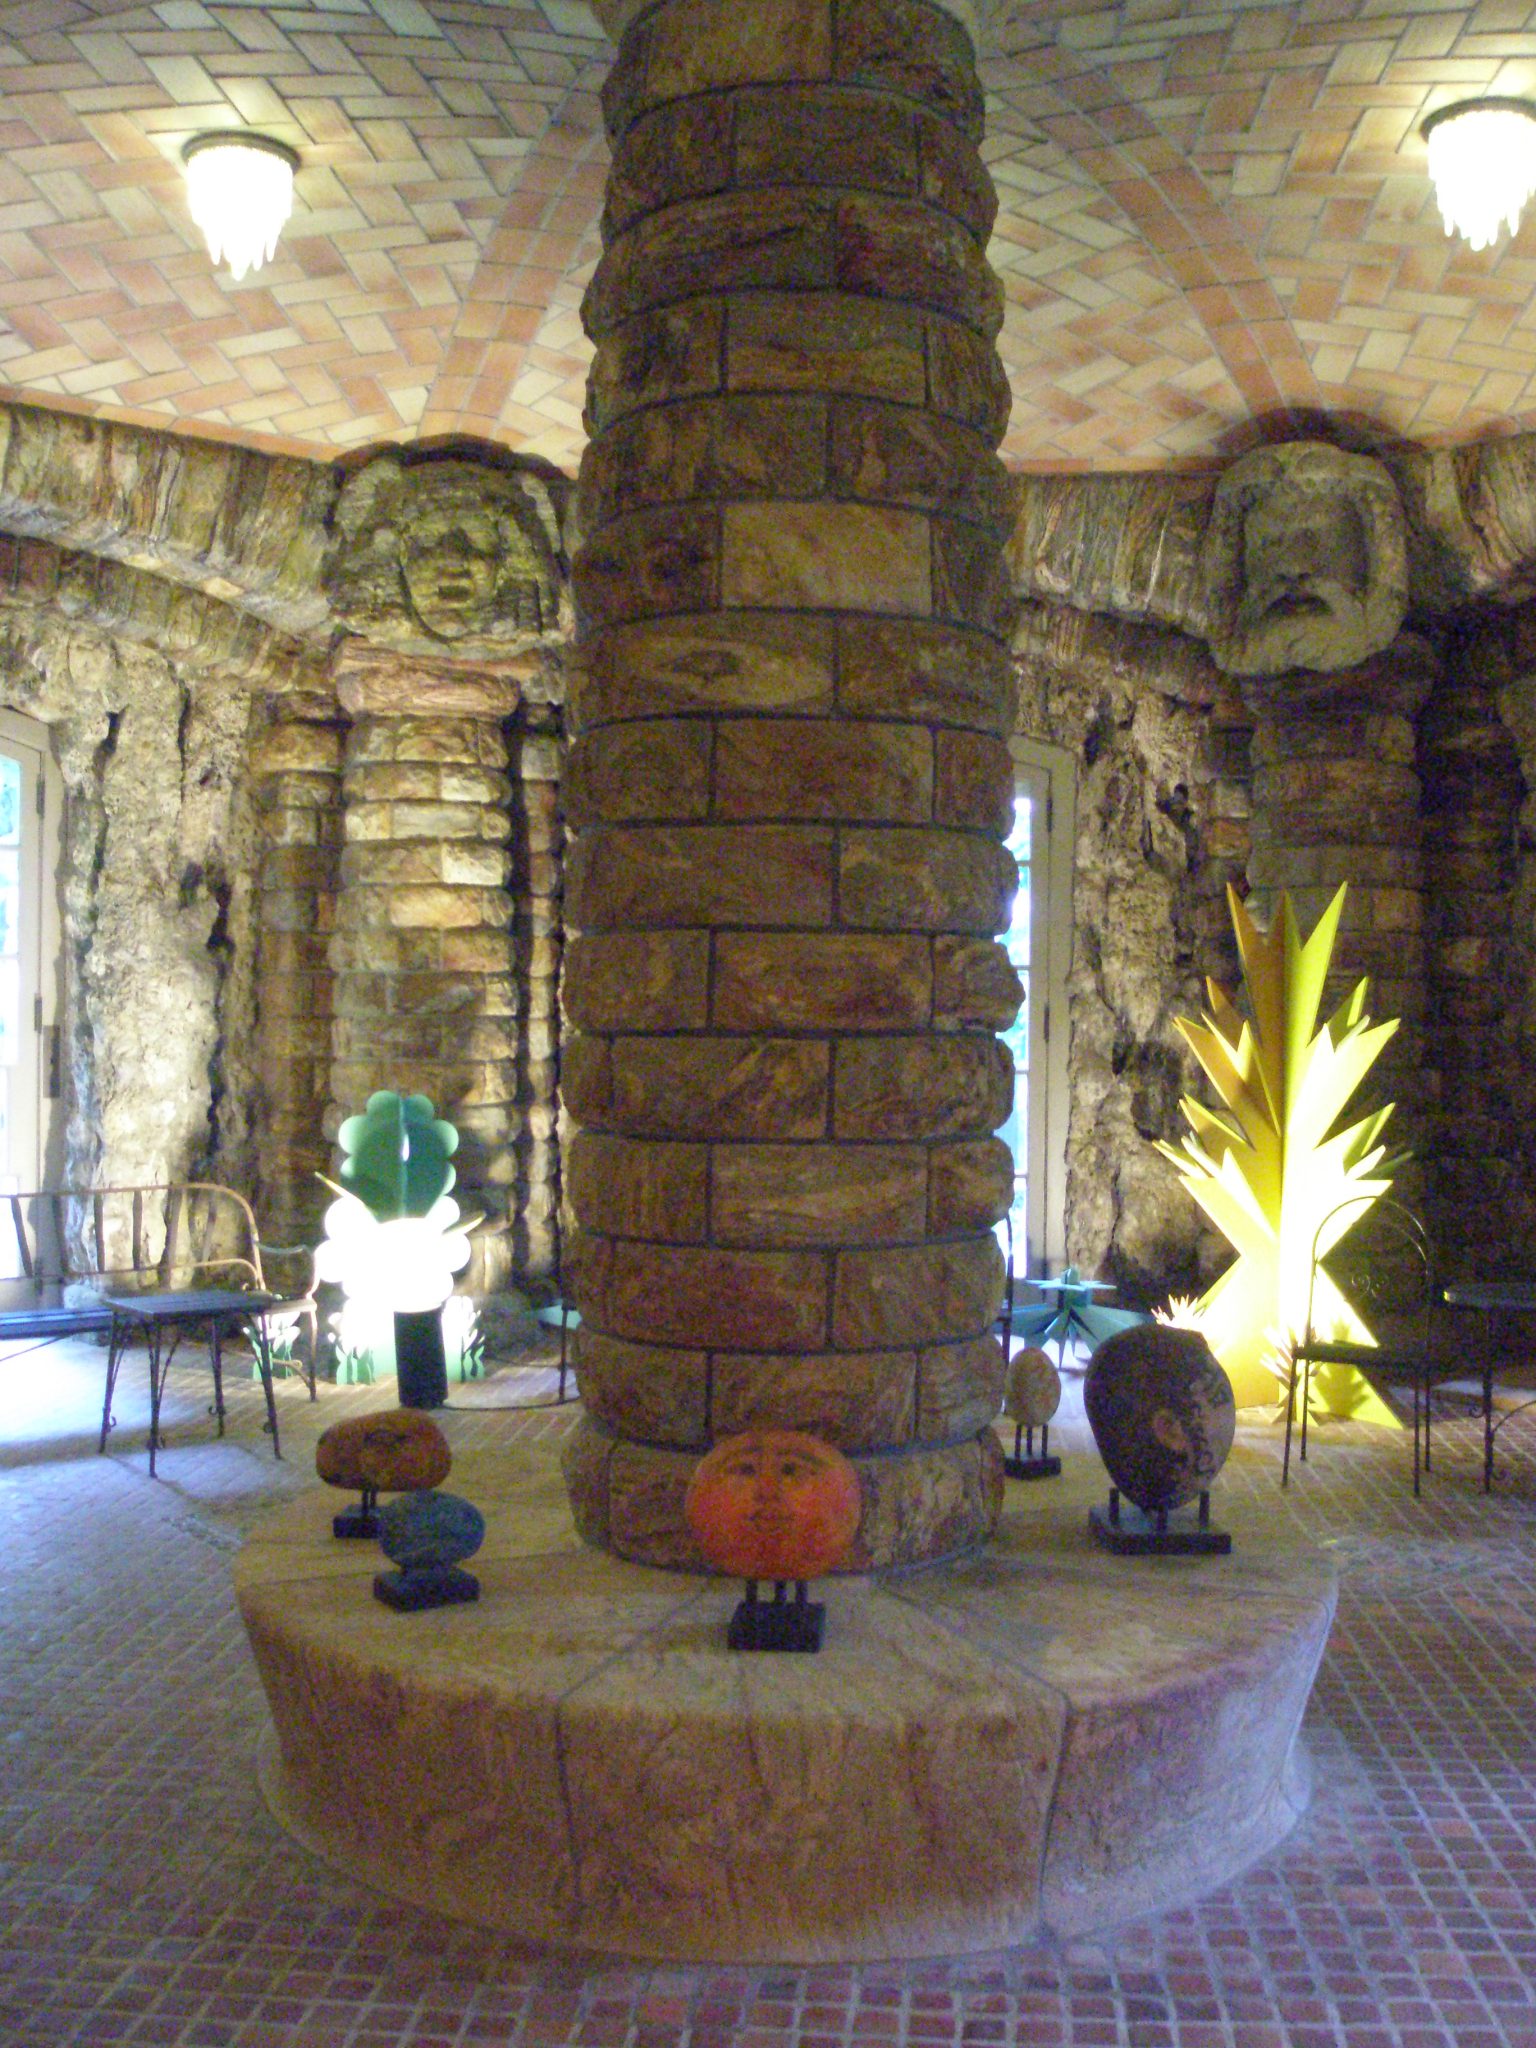 The Grotto, beneath the Temple of Venus